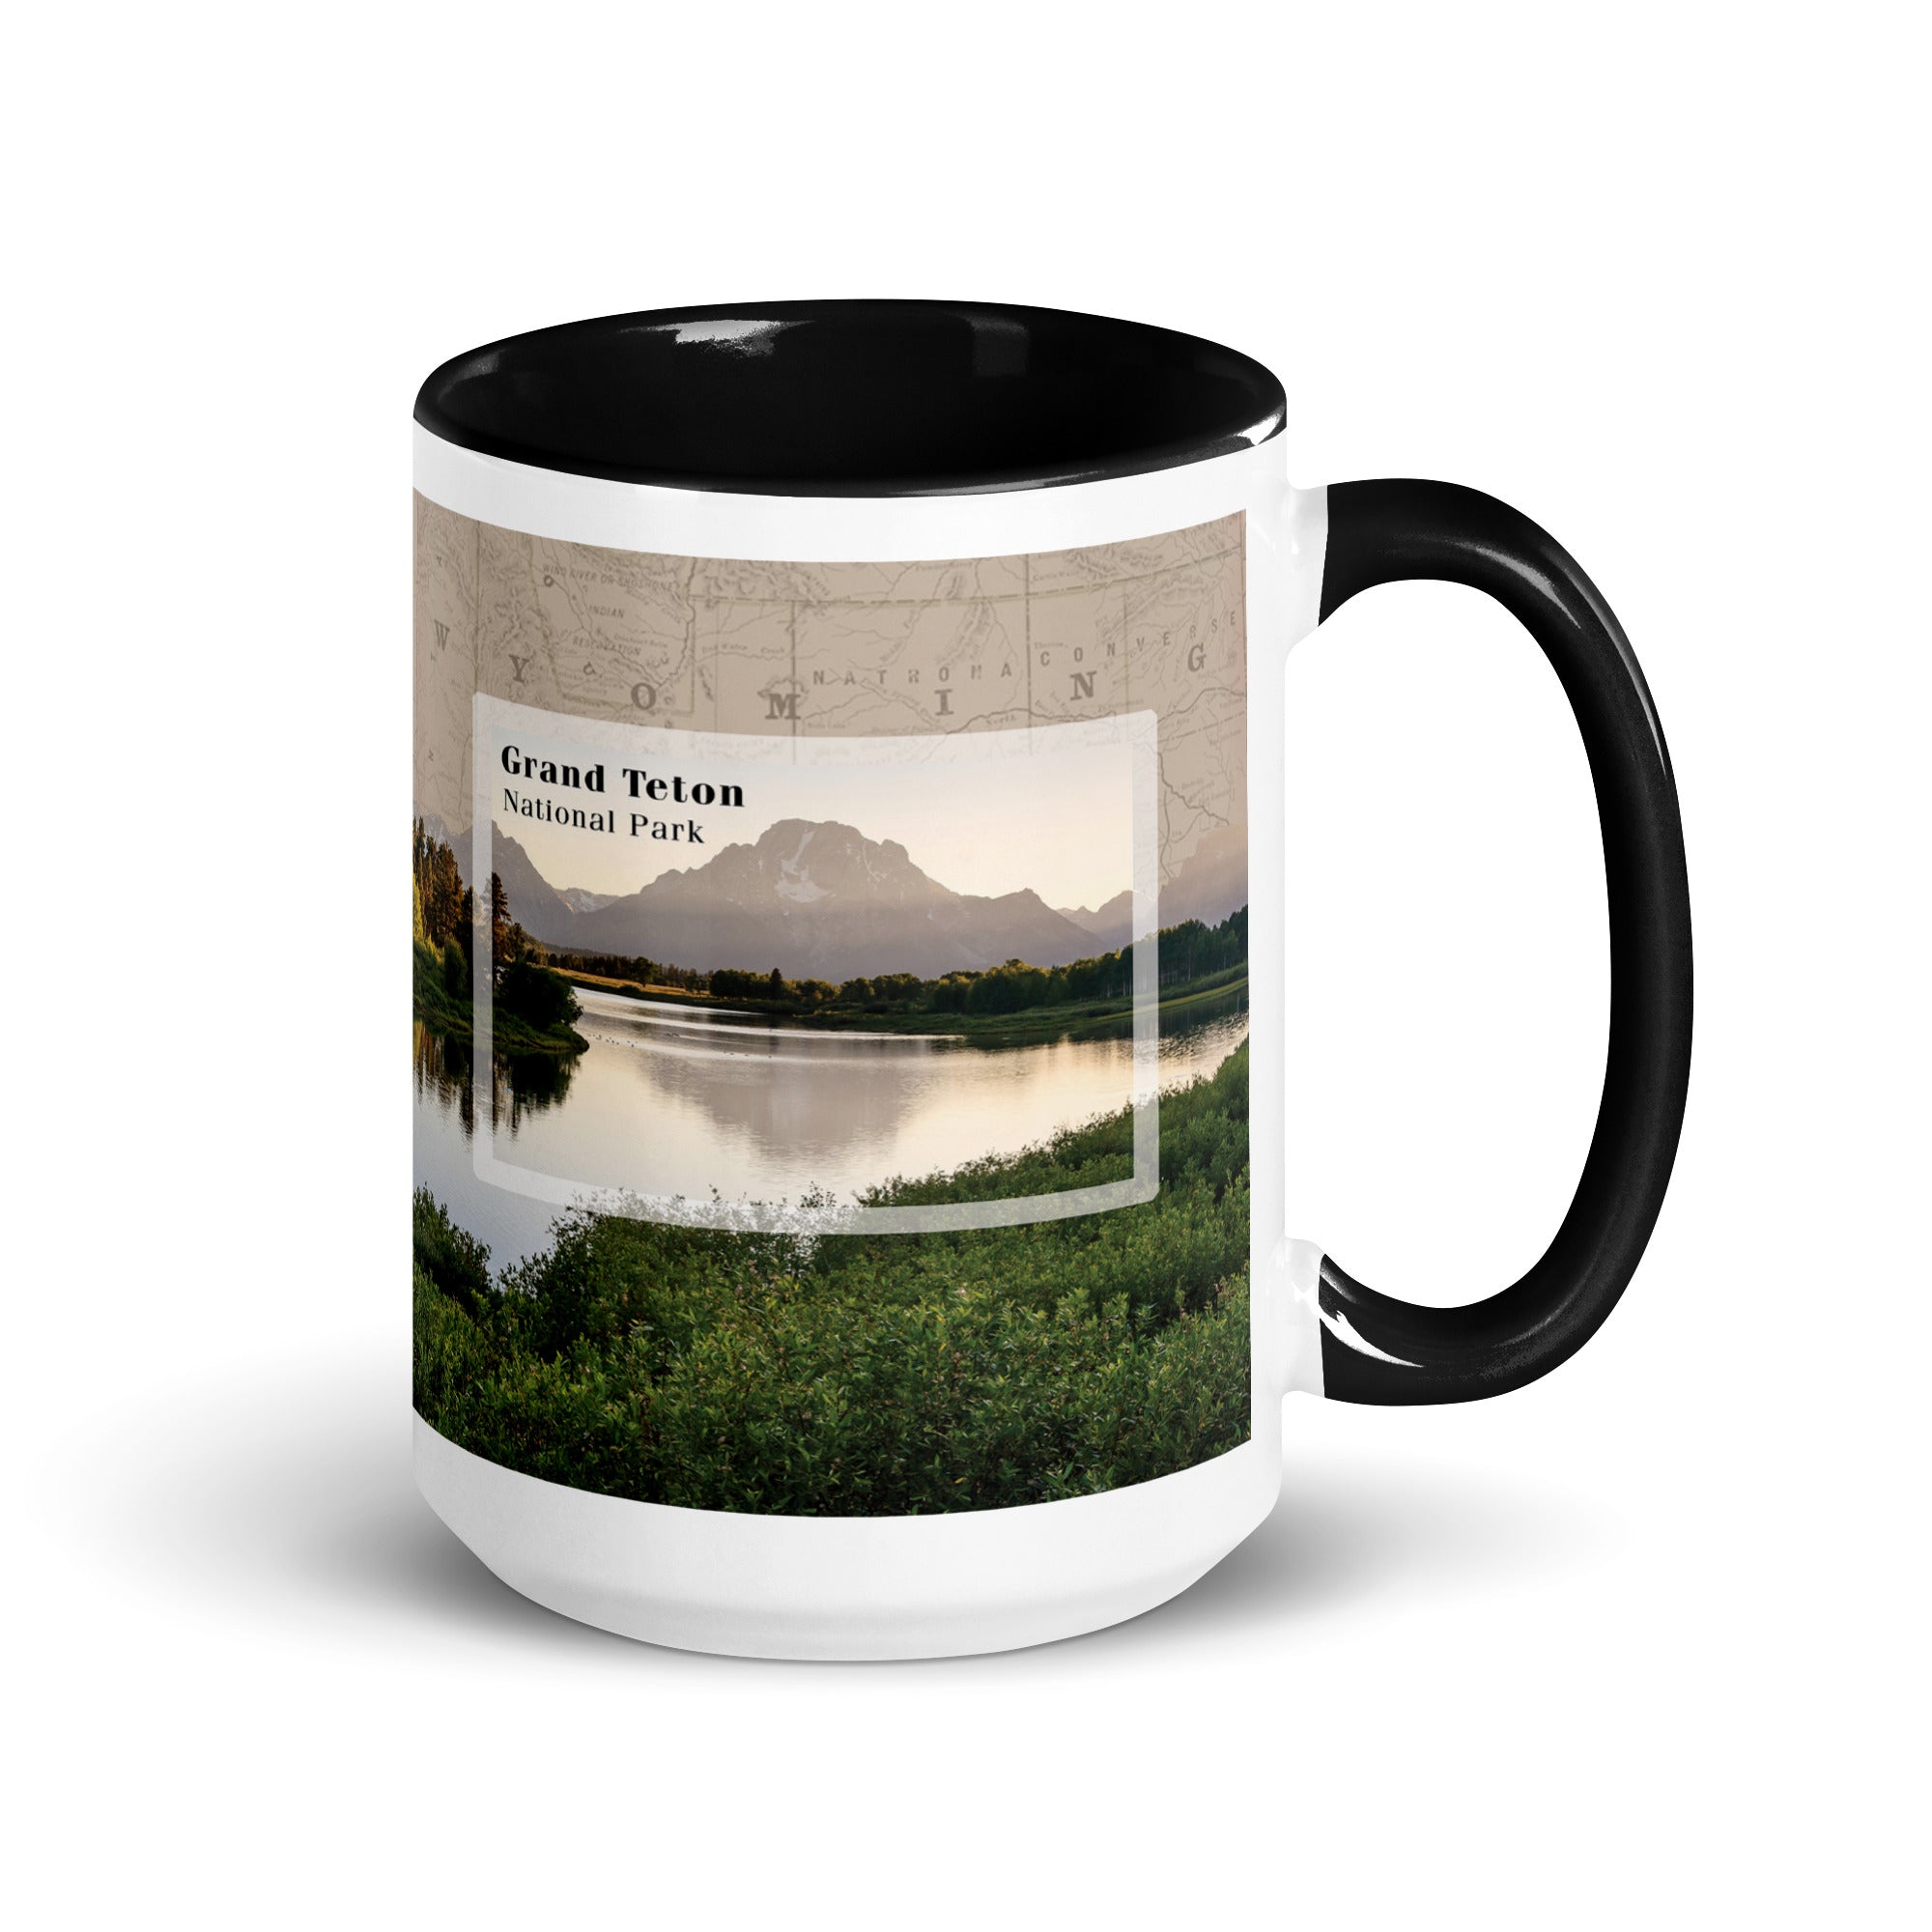 Grand Teton National Park Mug with Black Inside